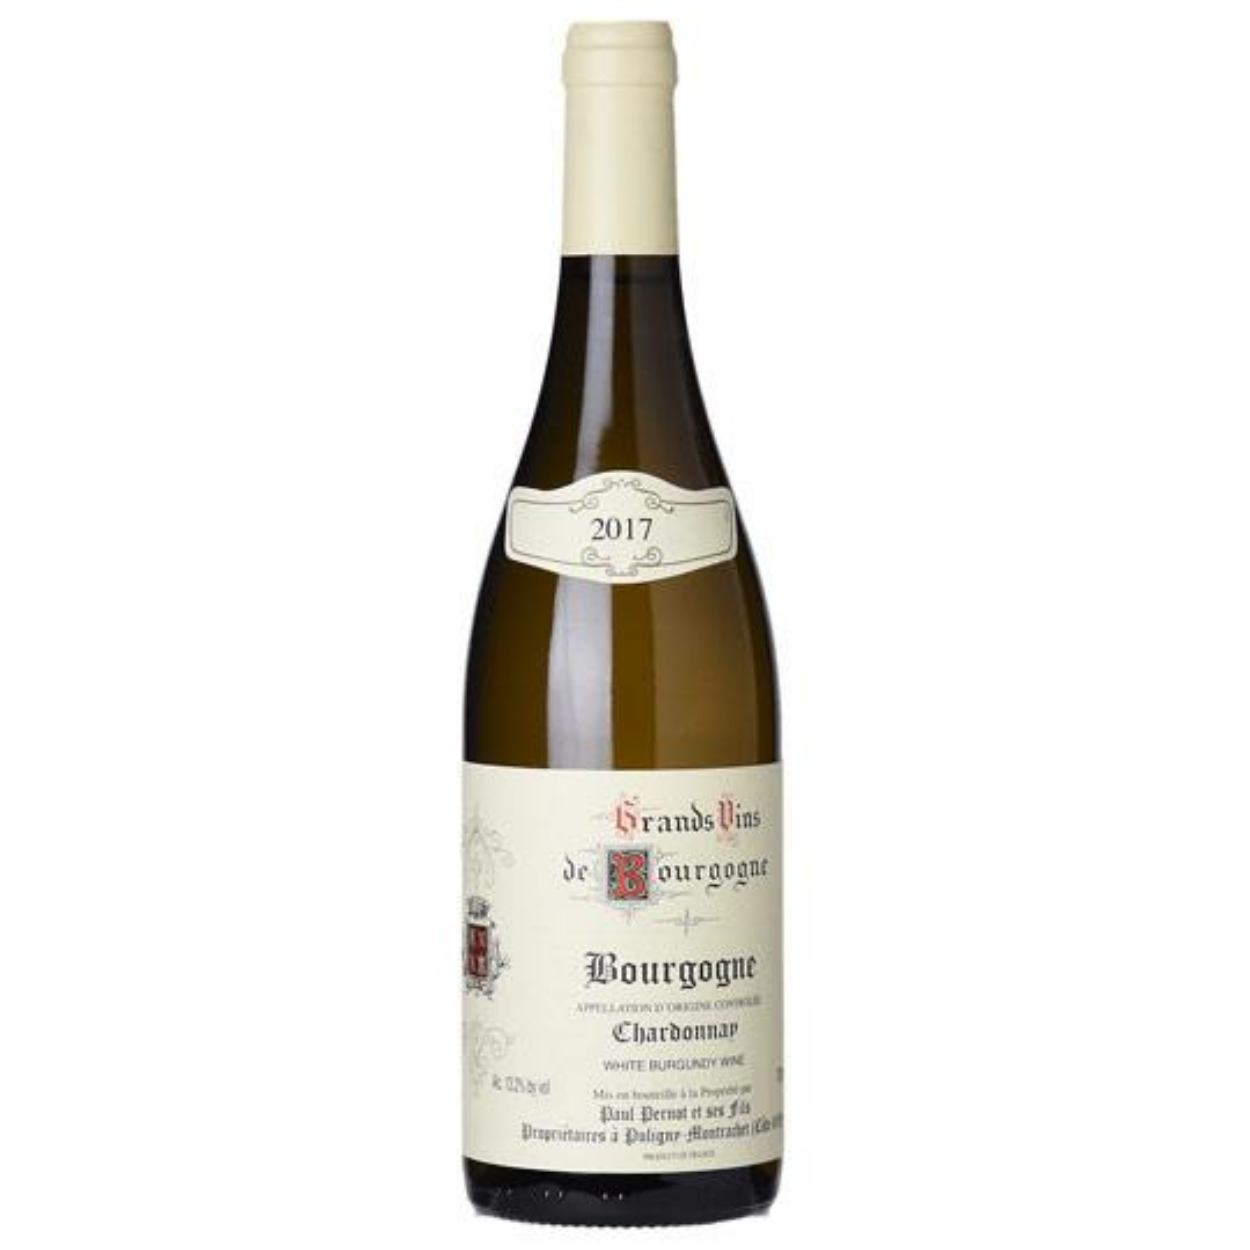 2017 Domaine Paul Pernot Bourgogne Chardonnay Burgundy France - The Wine Connection